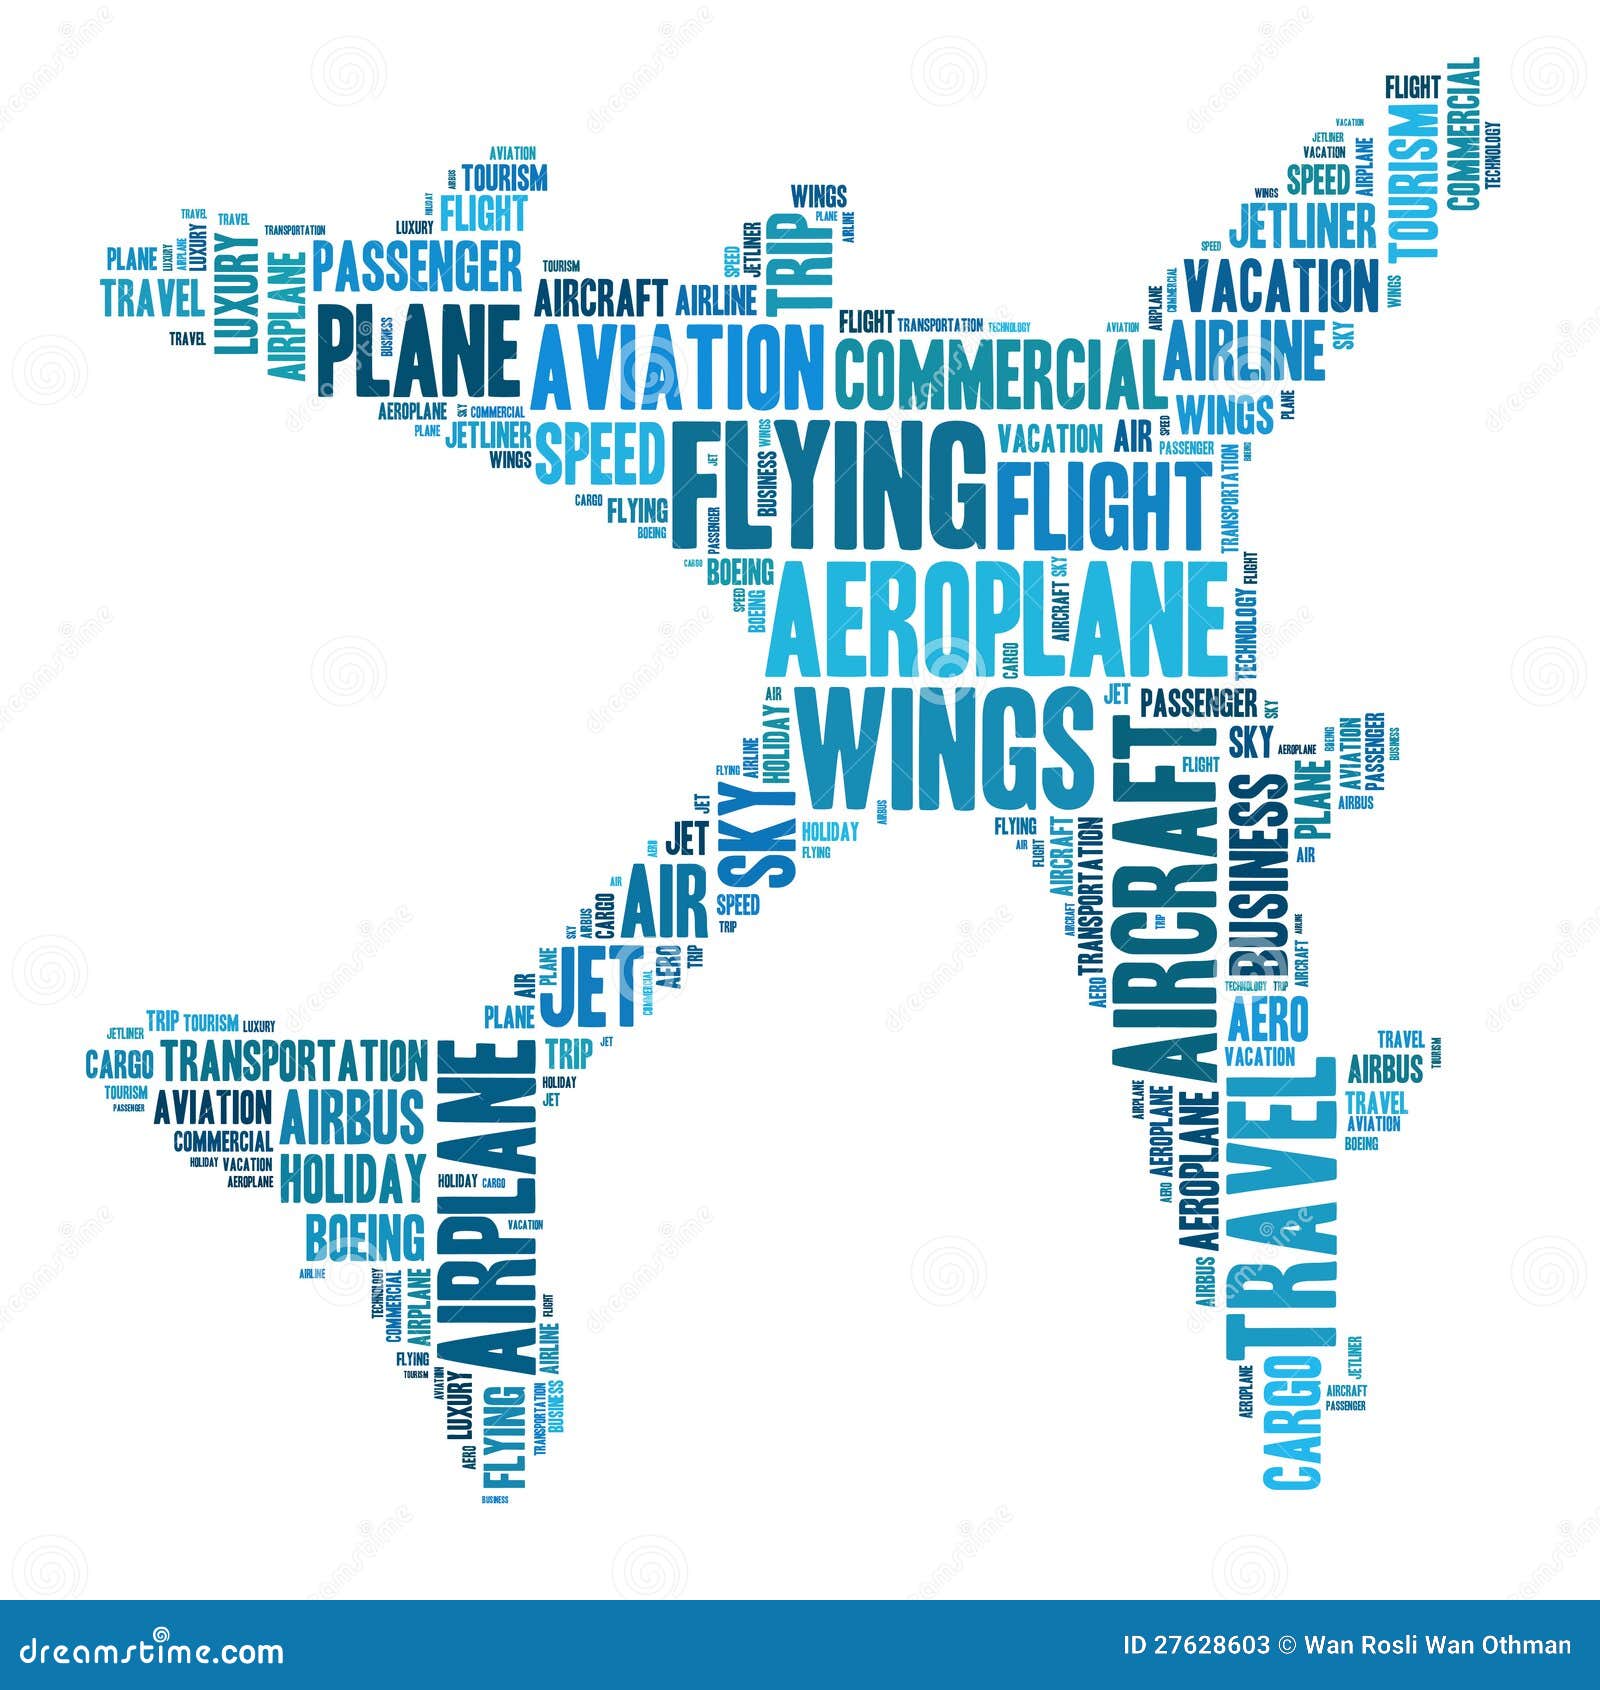 aeroplane graphics